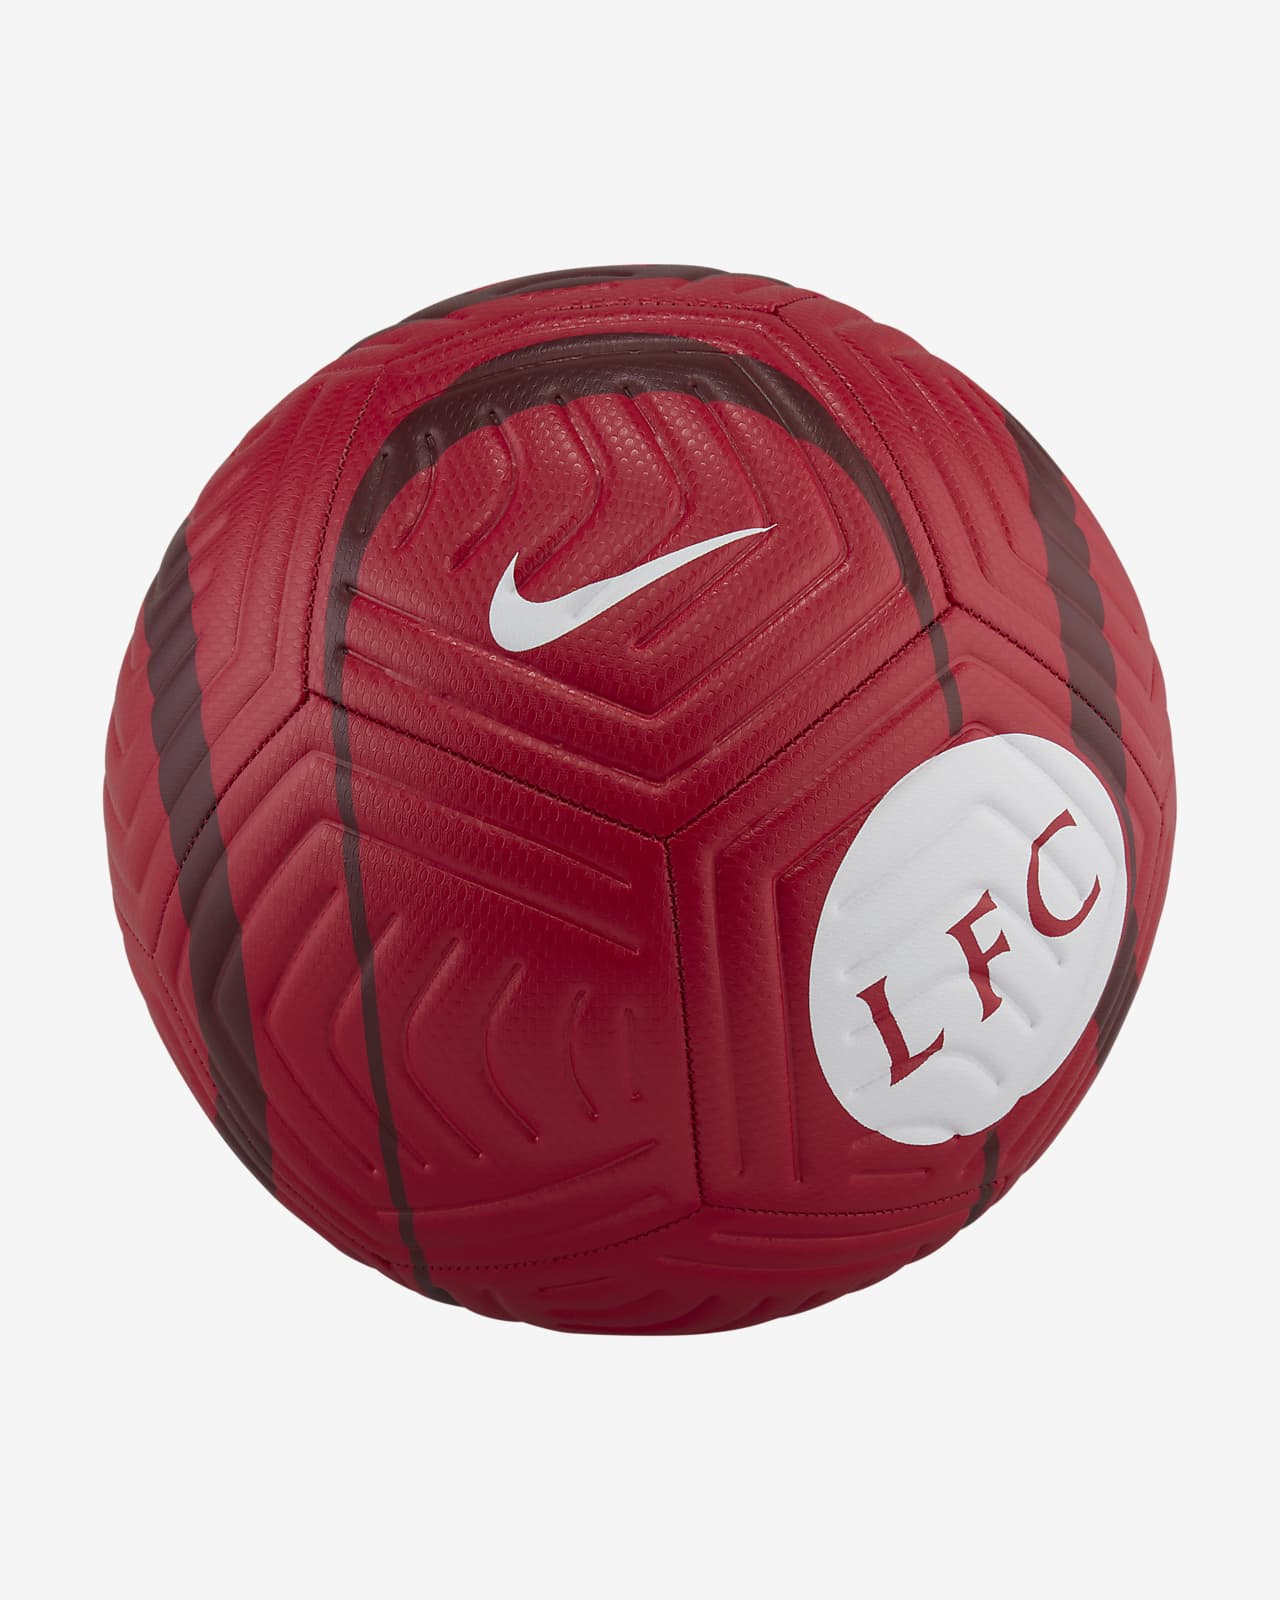 Liverpool Strike Soccer Ball.